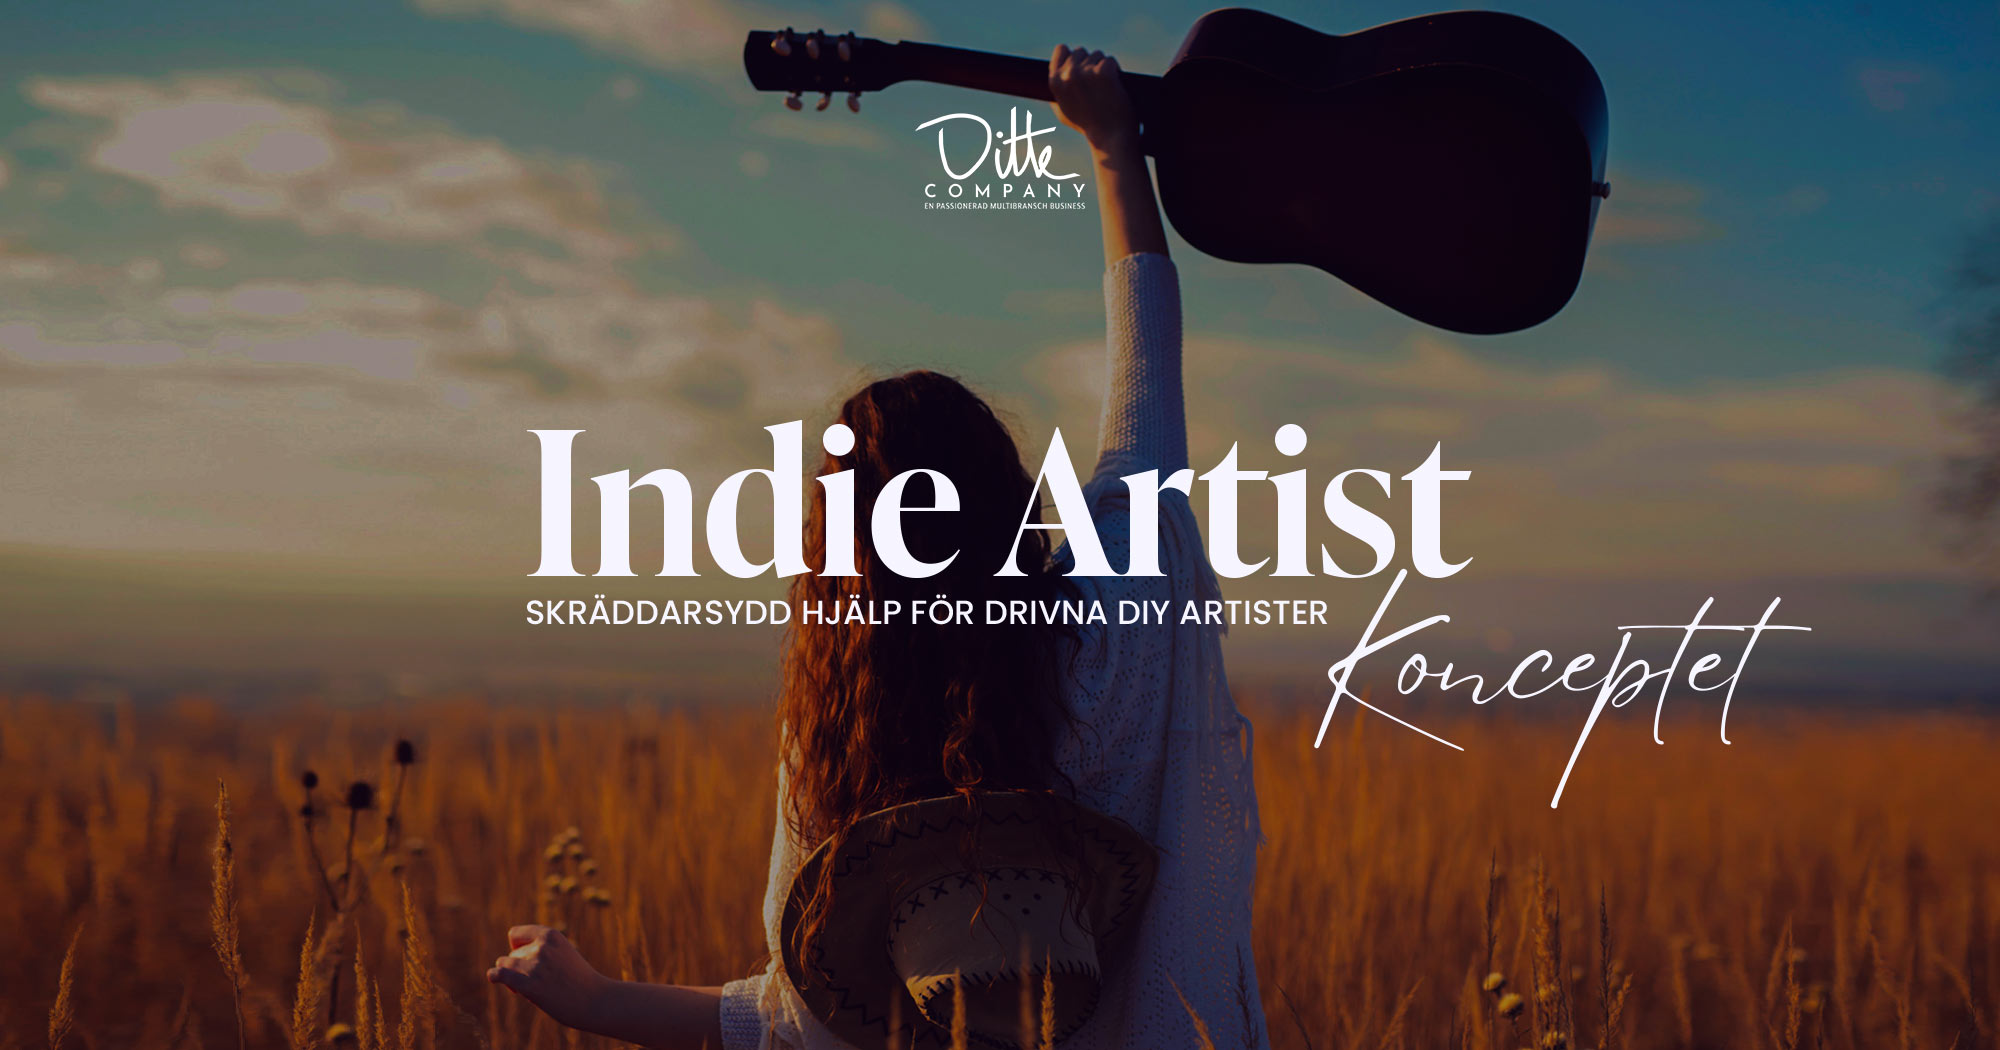 Indie Artist Konceptet Ditte Company